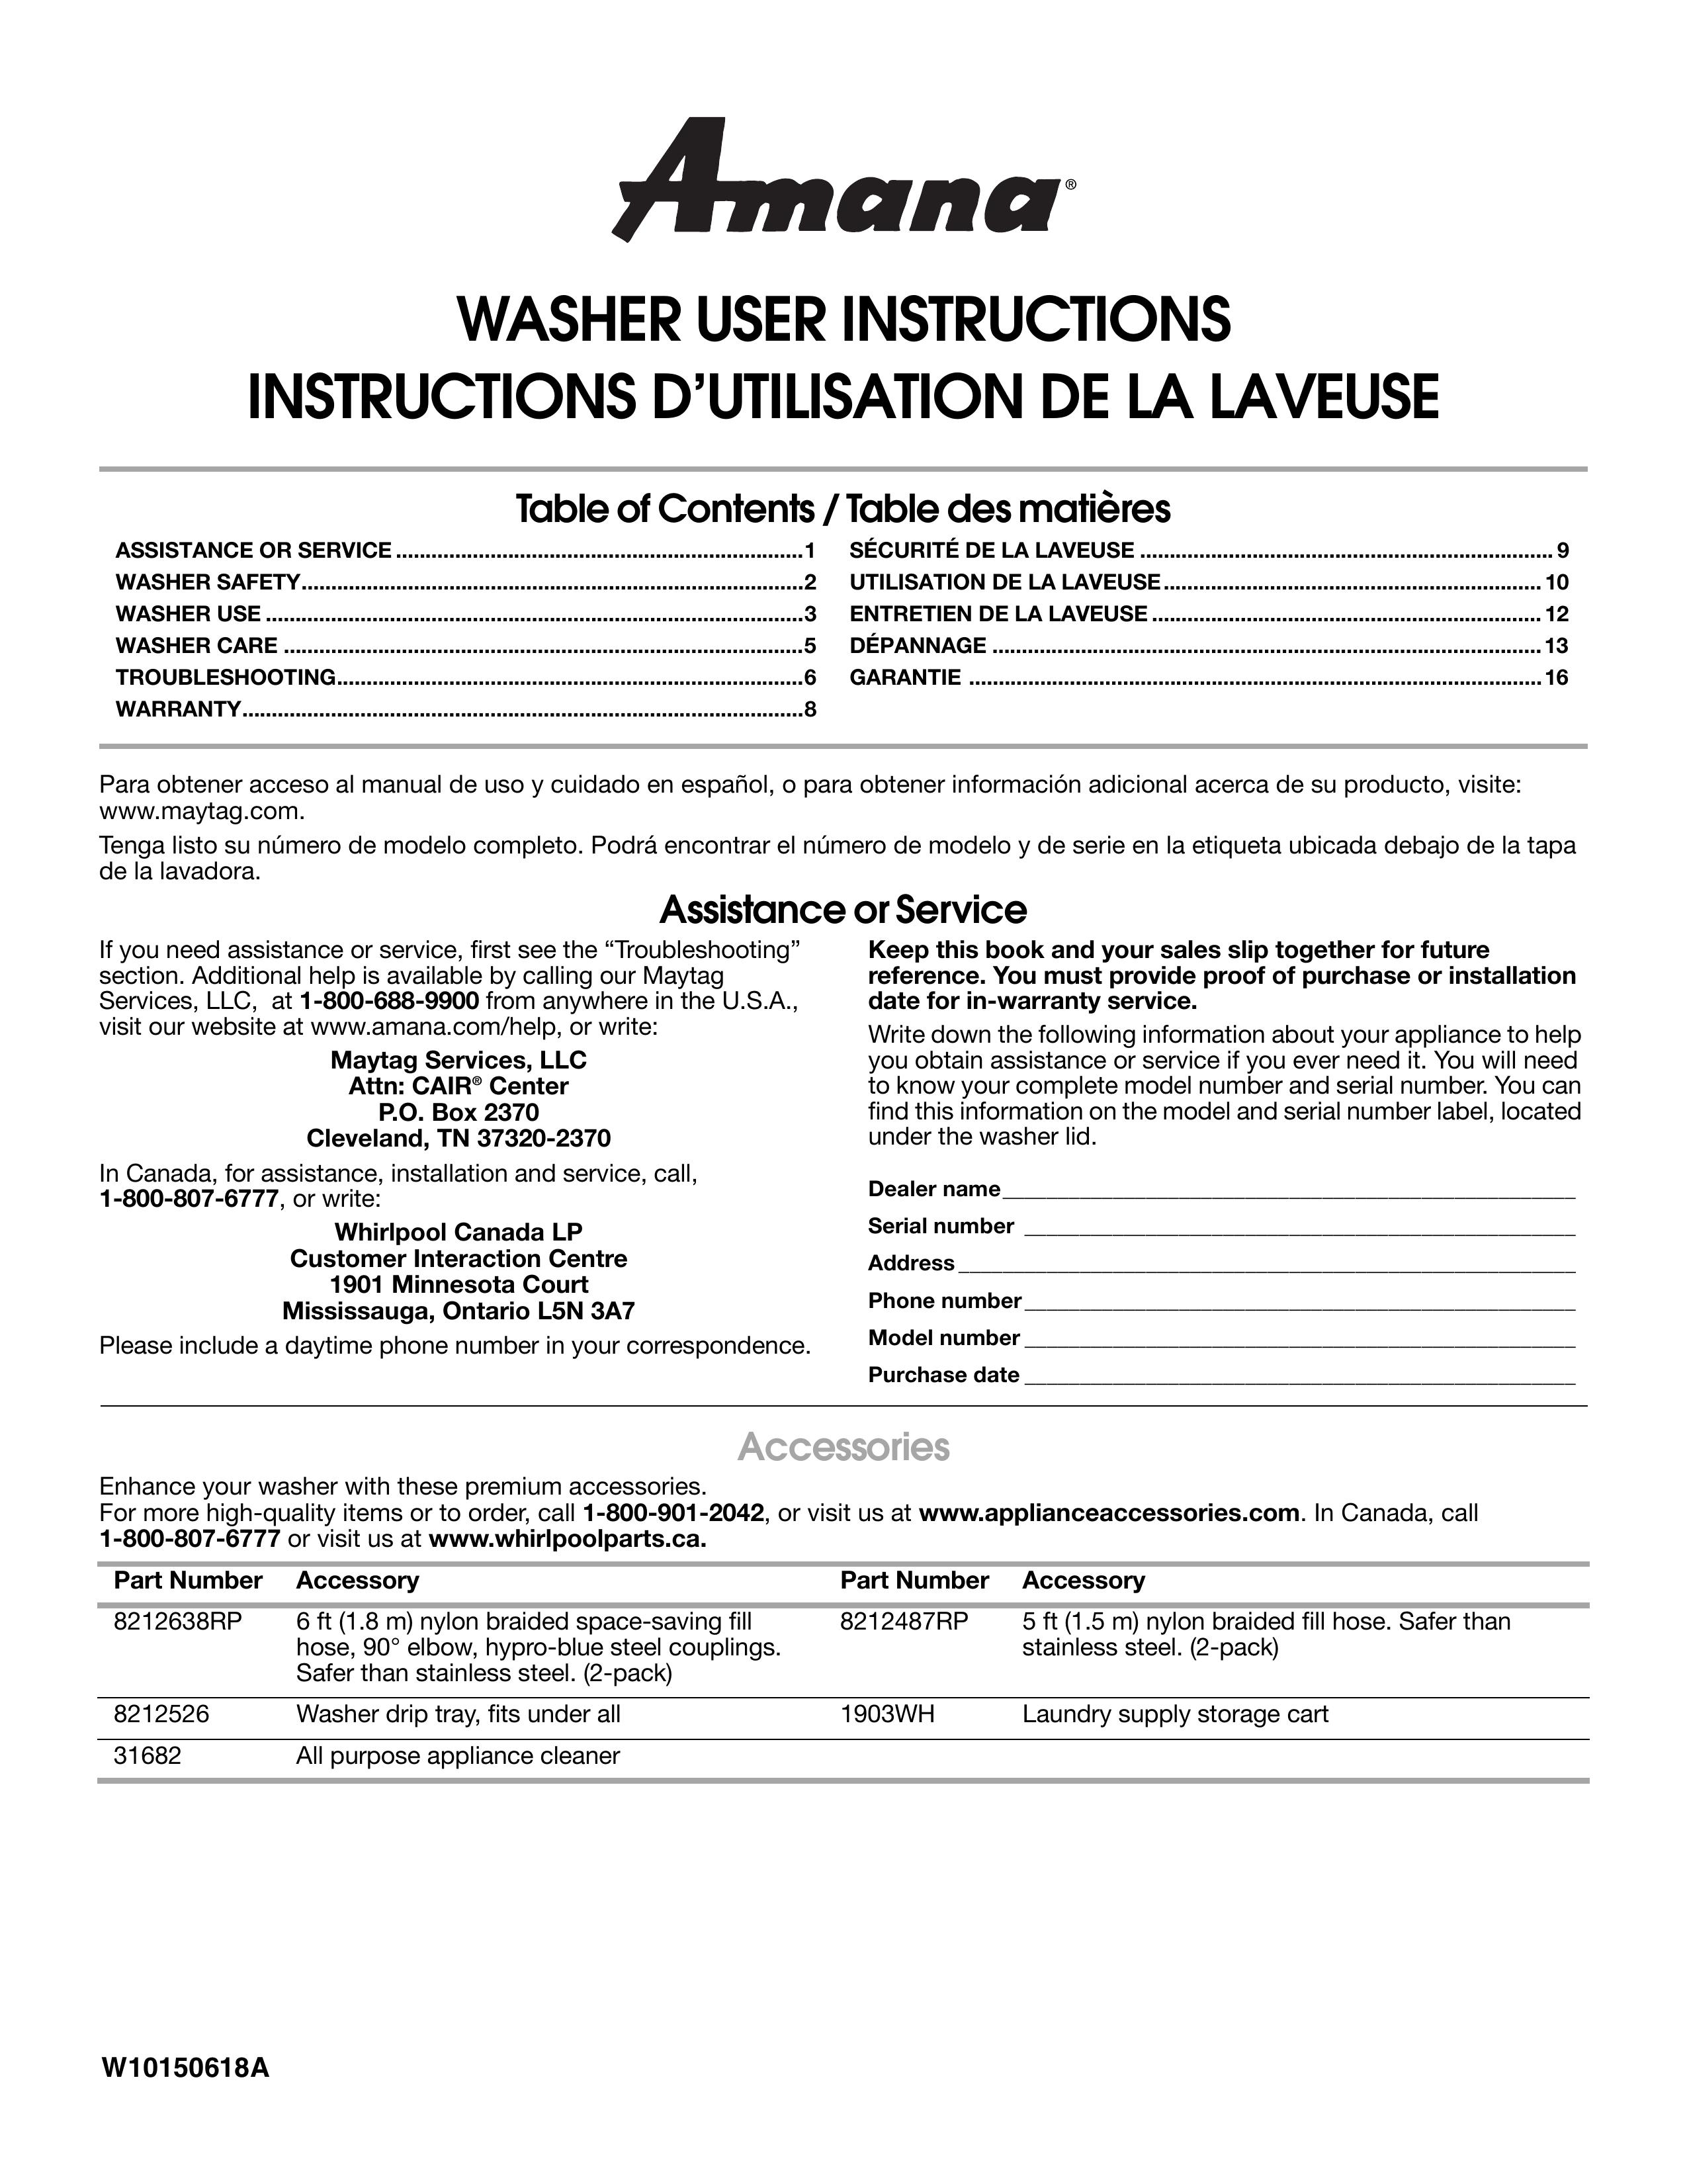 Amana W10150618A Washer User Manual